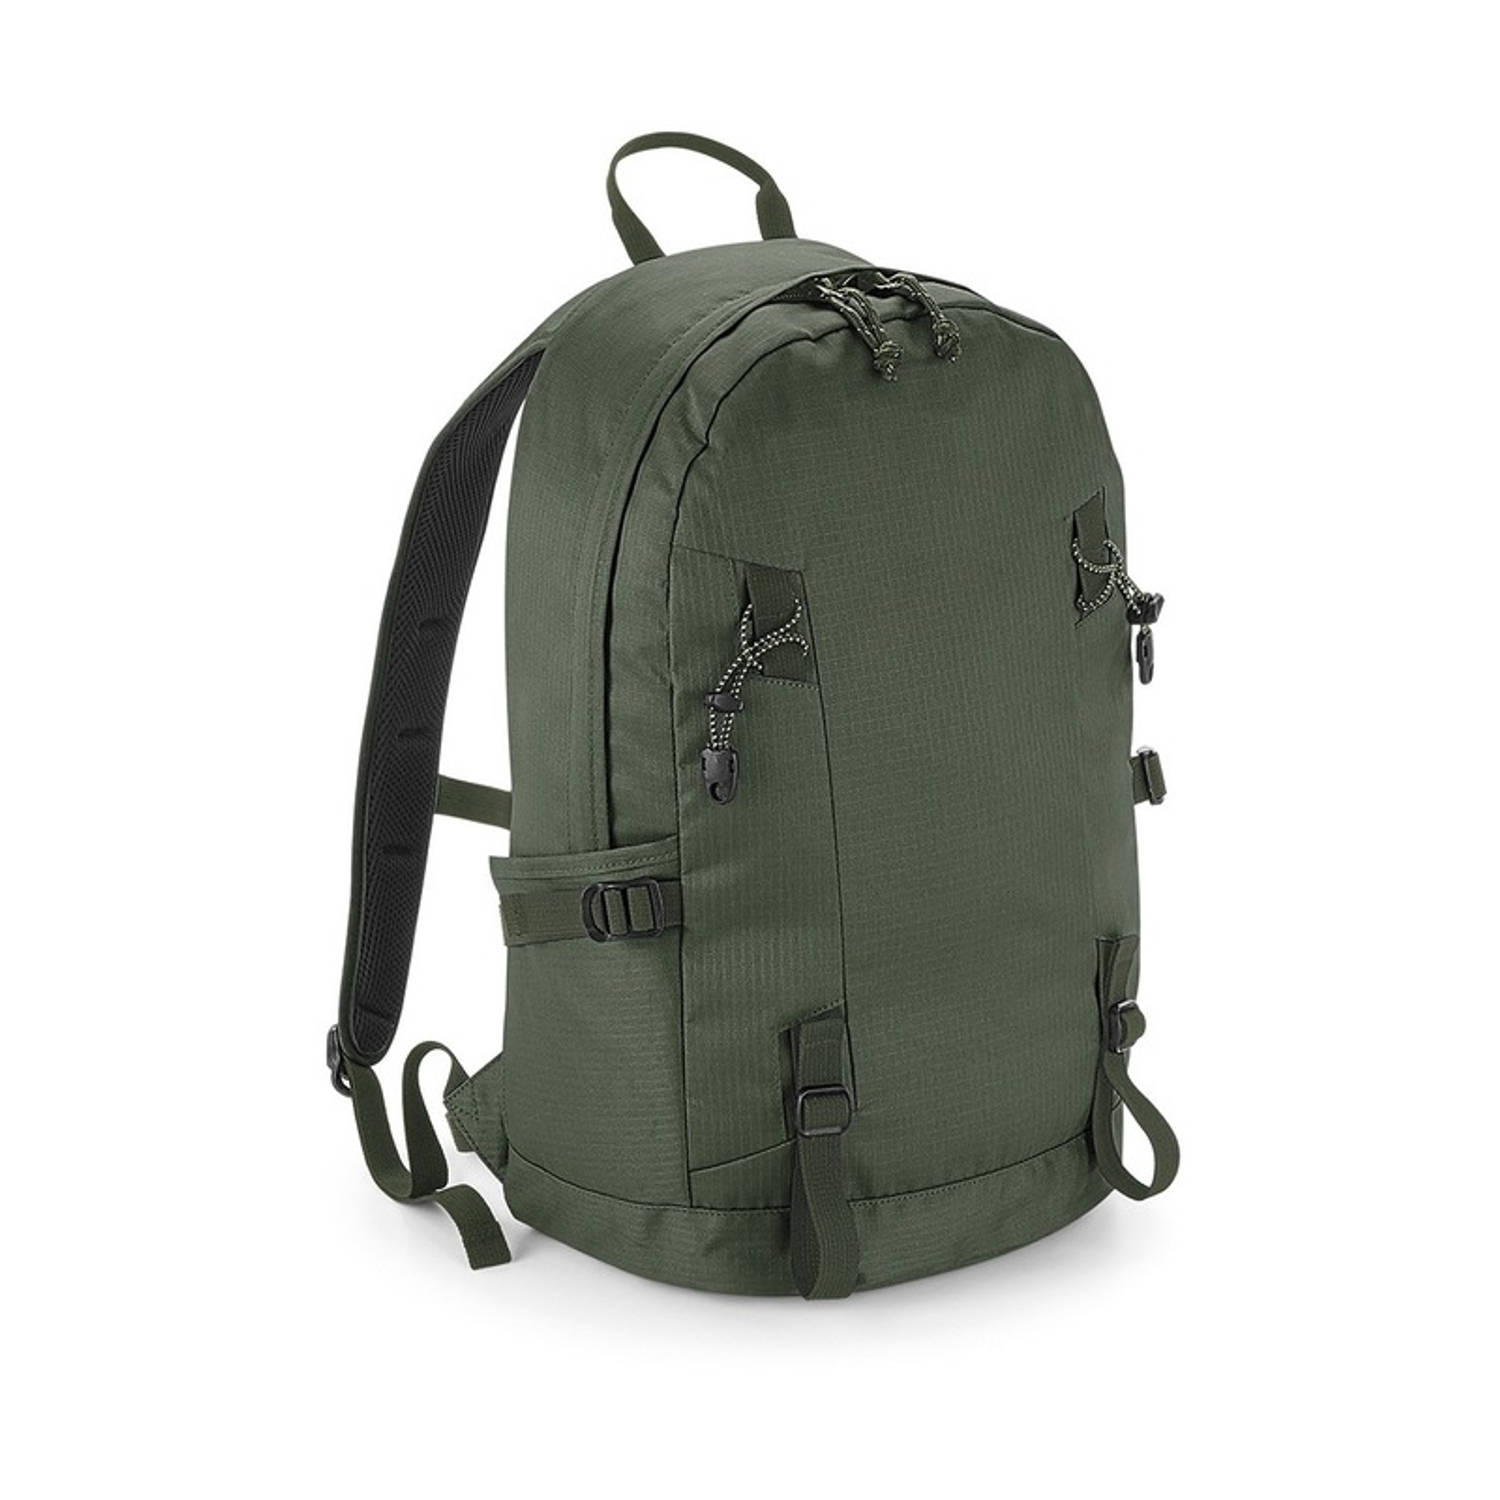 Olijf groene rugzak-rugtas voor wandelaars-backpackers 20 liter Rugtassen voor op reis Backpacken Wa